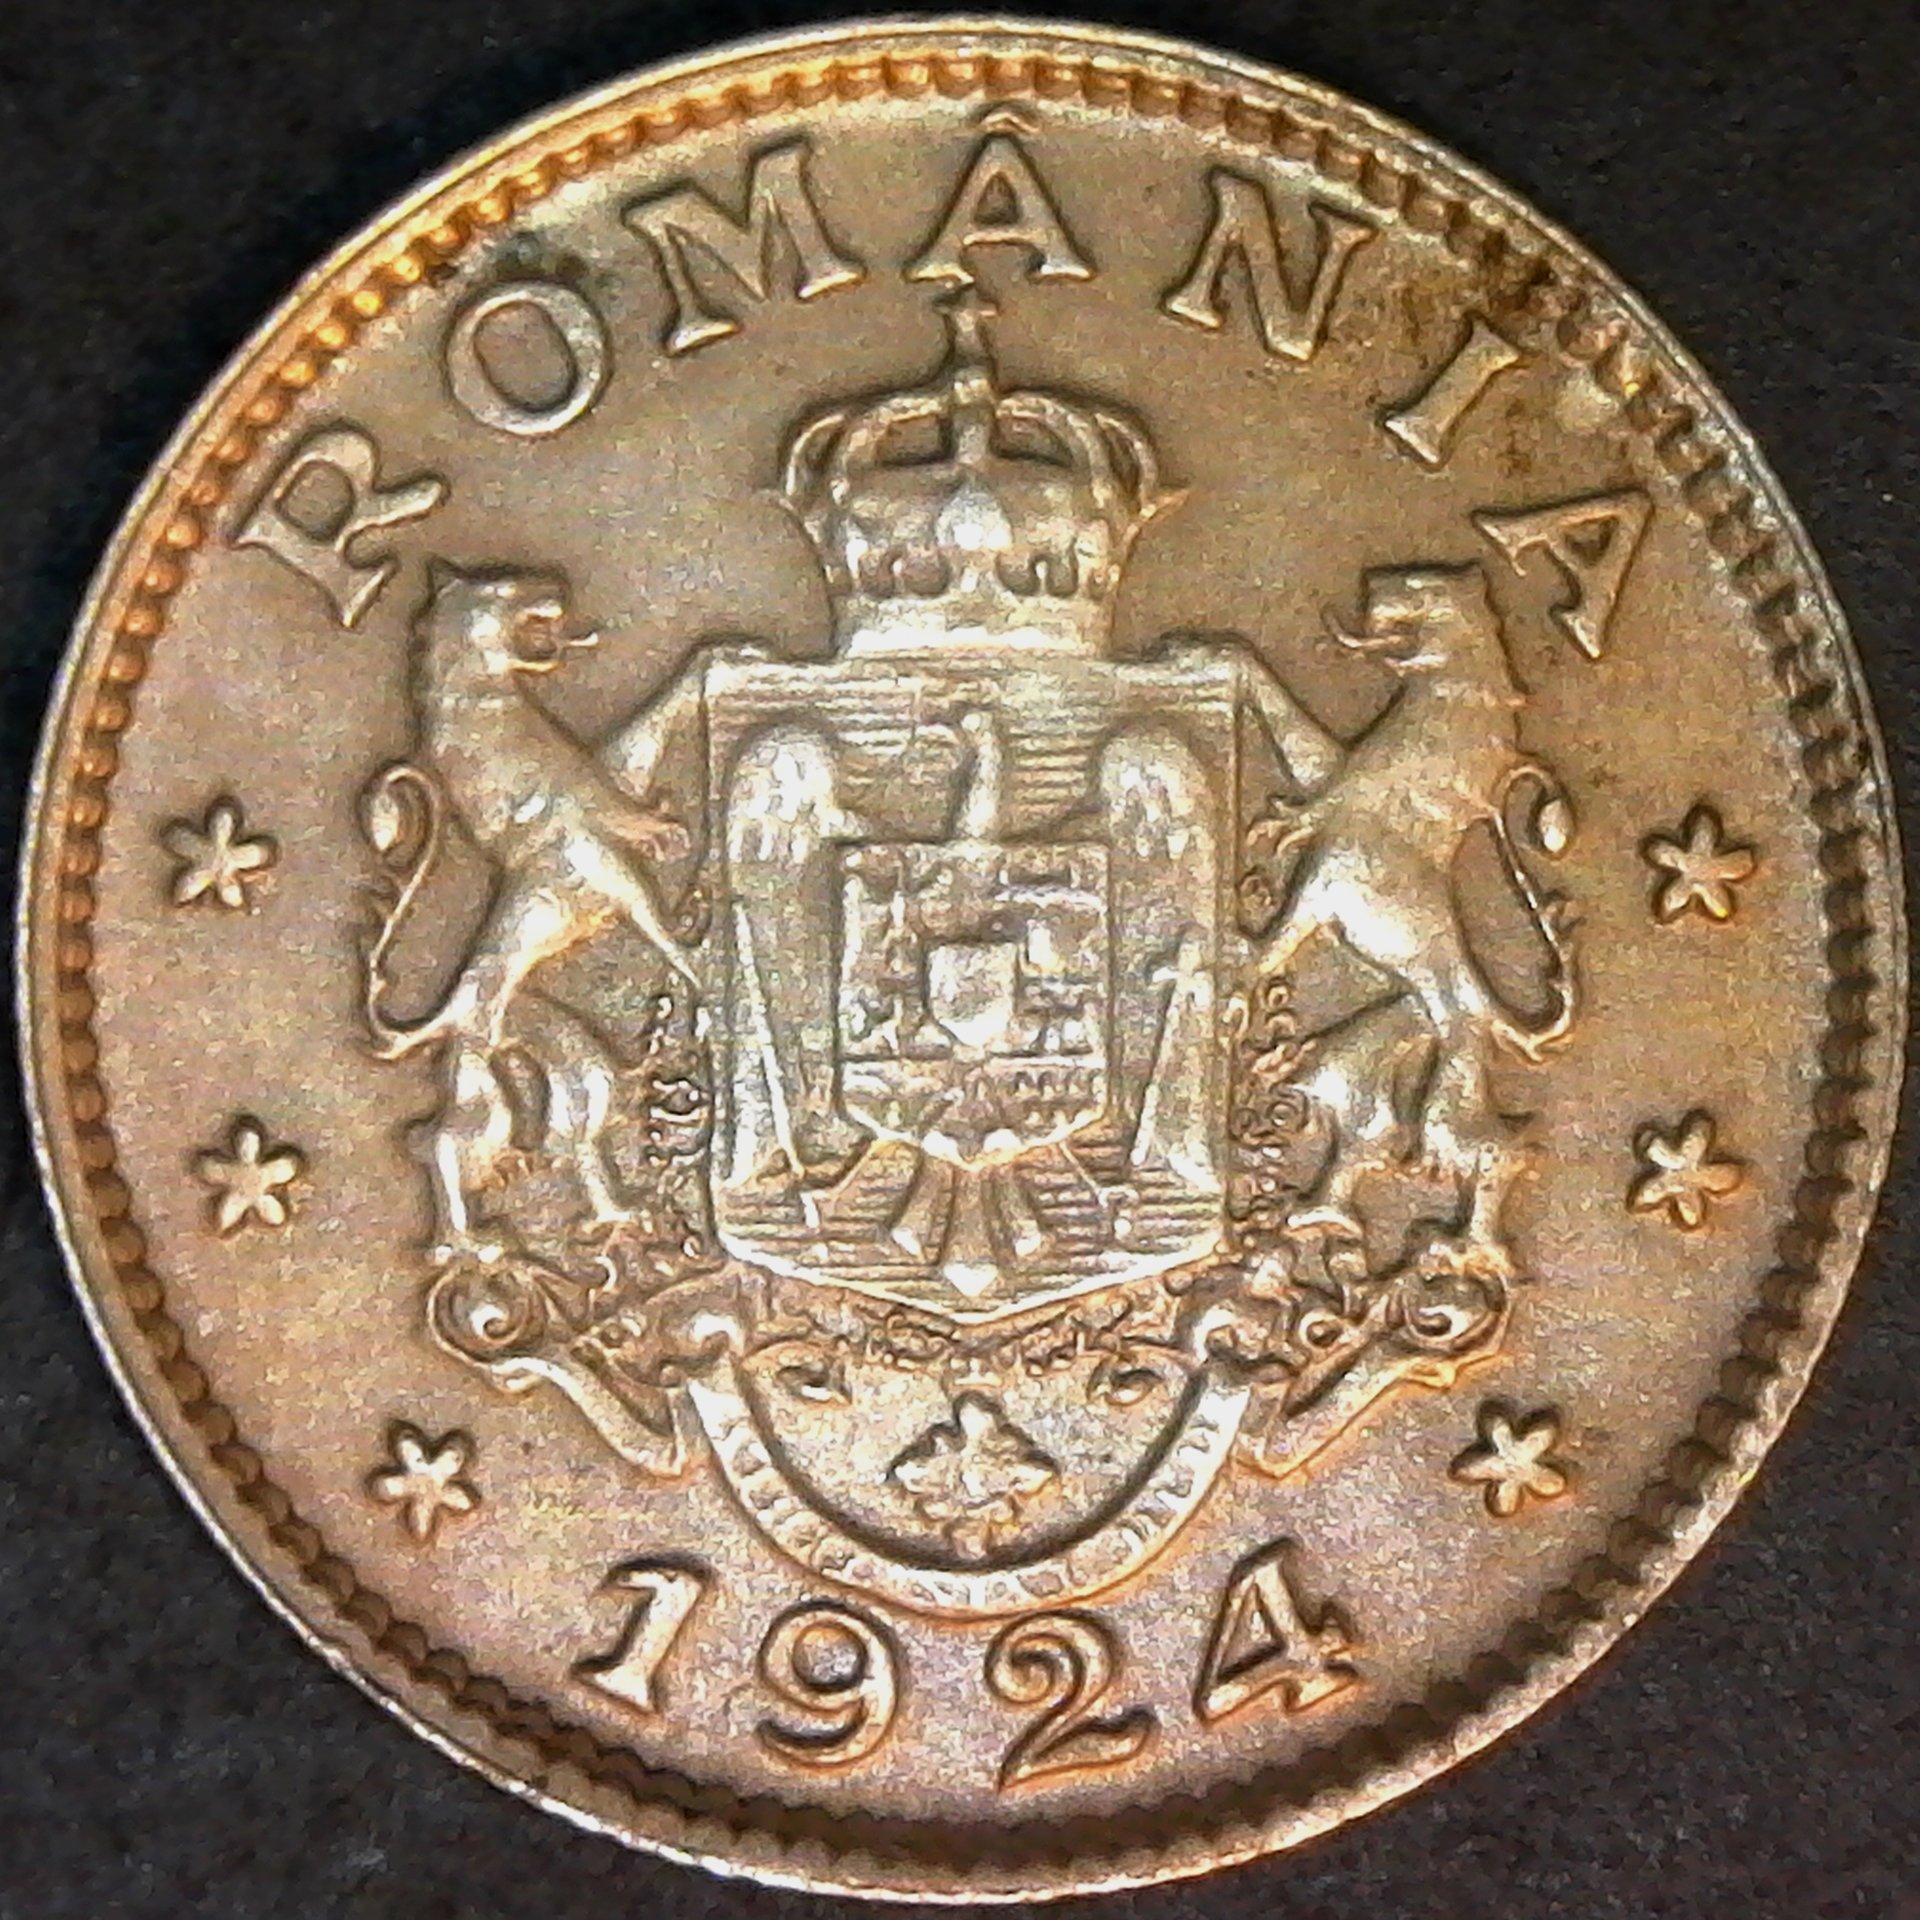 Romania 1 Leu 1924 obverse.jpg